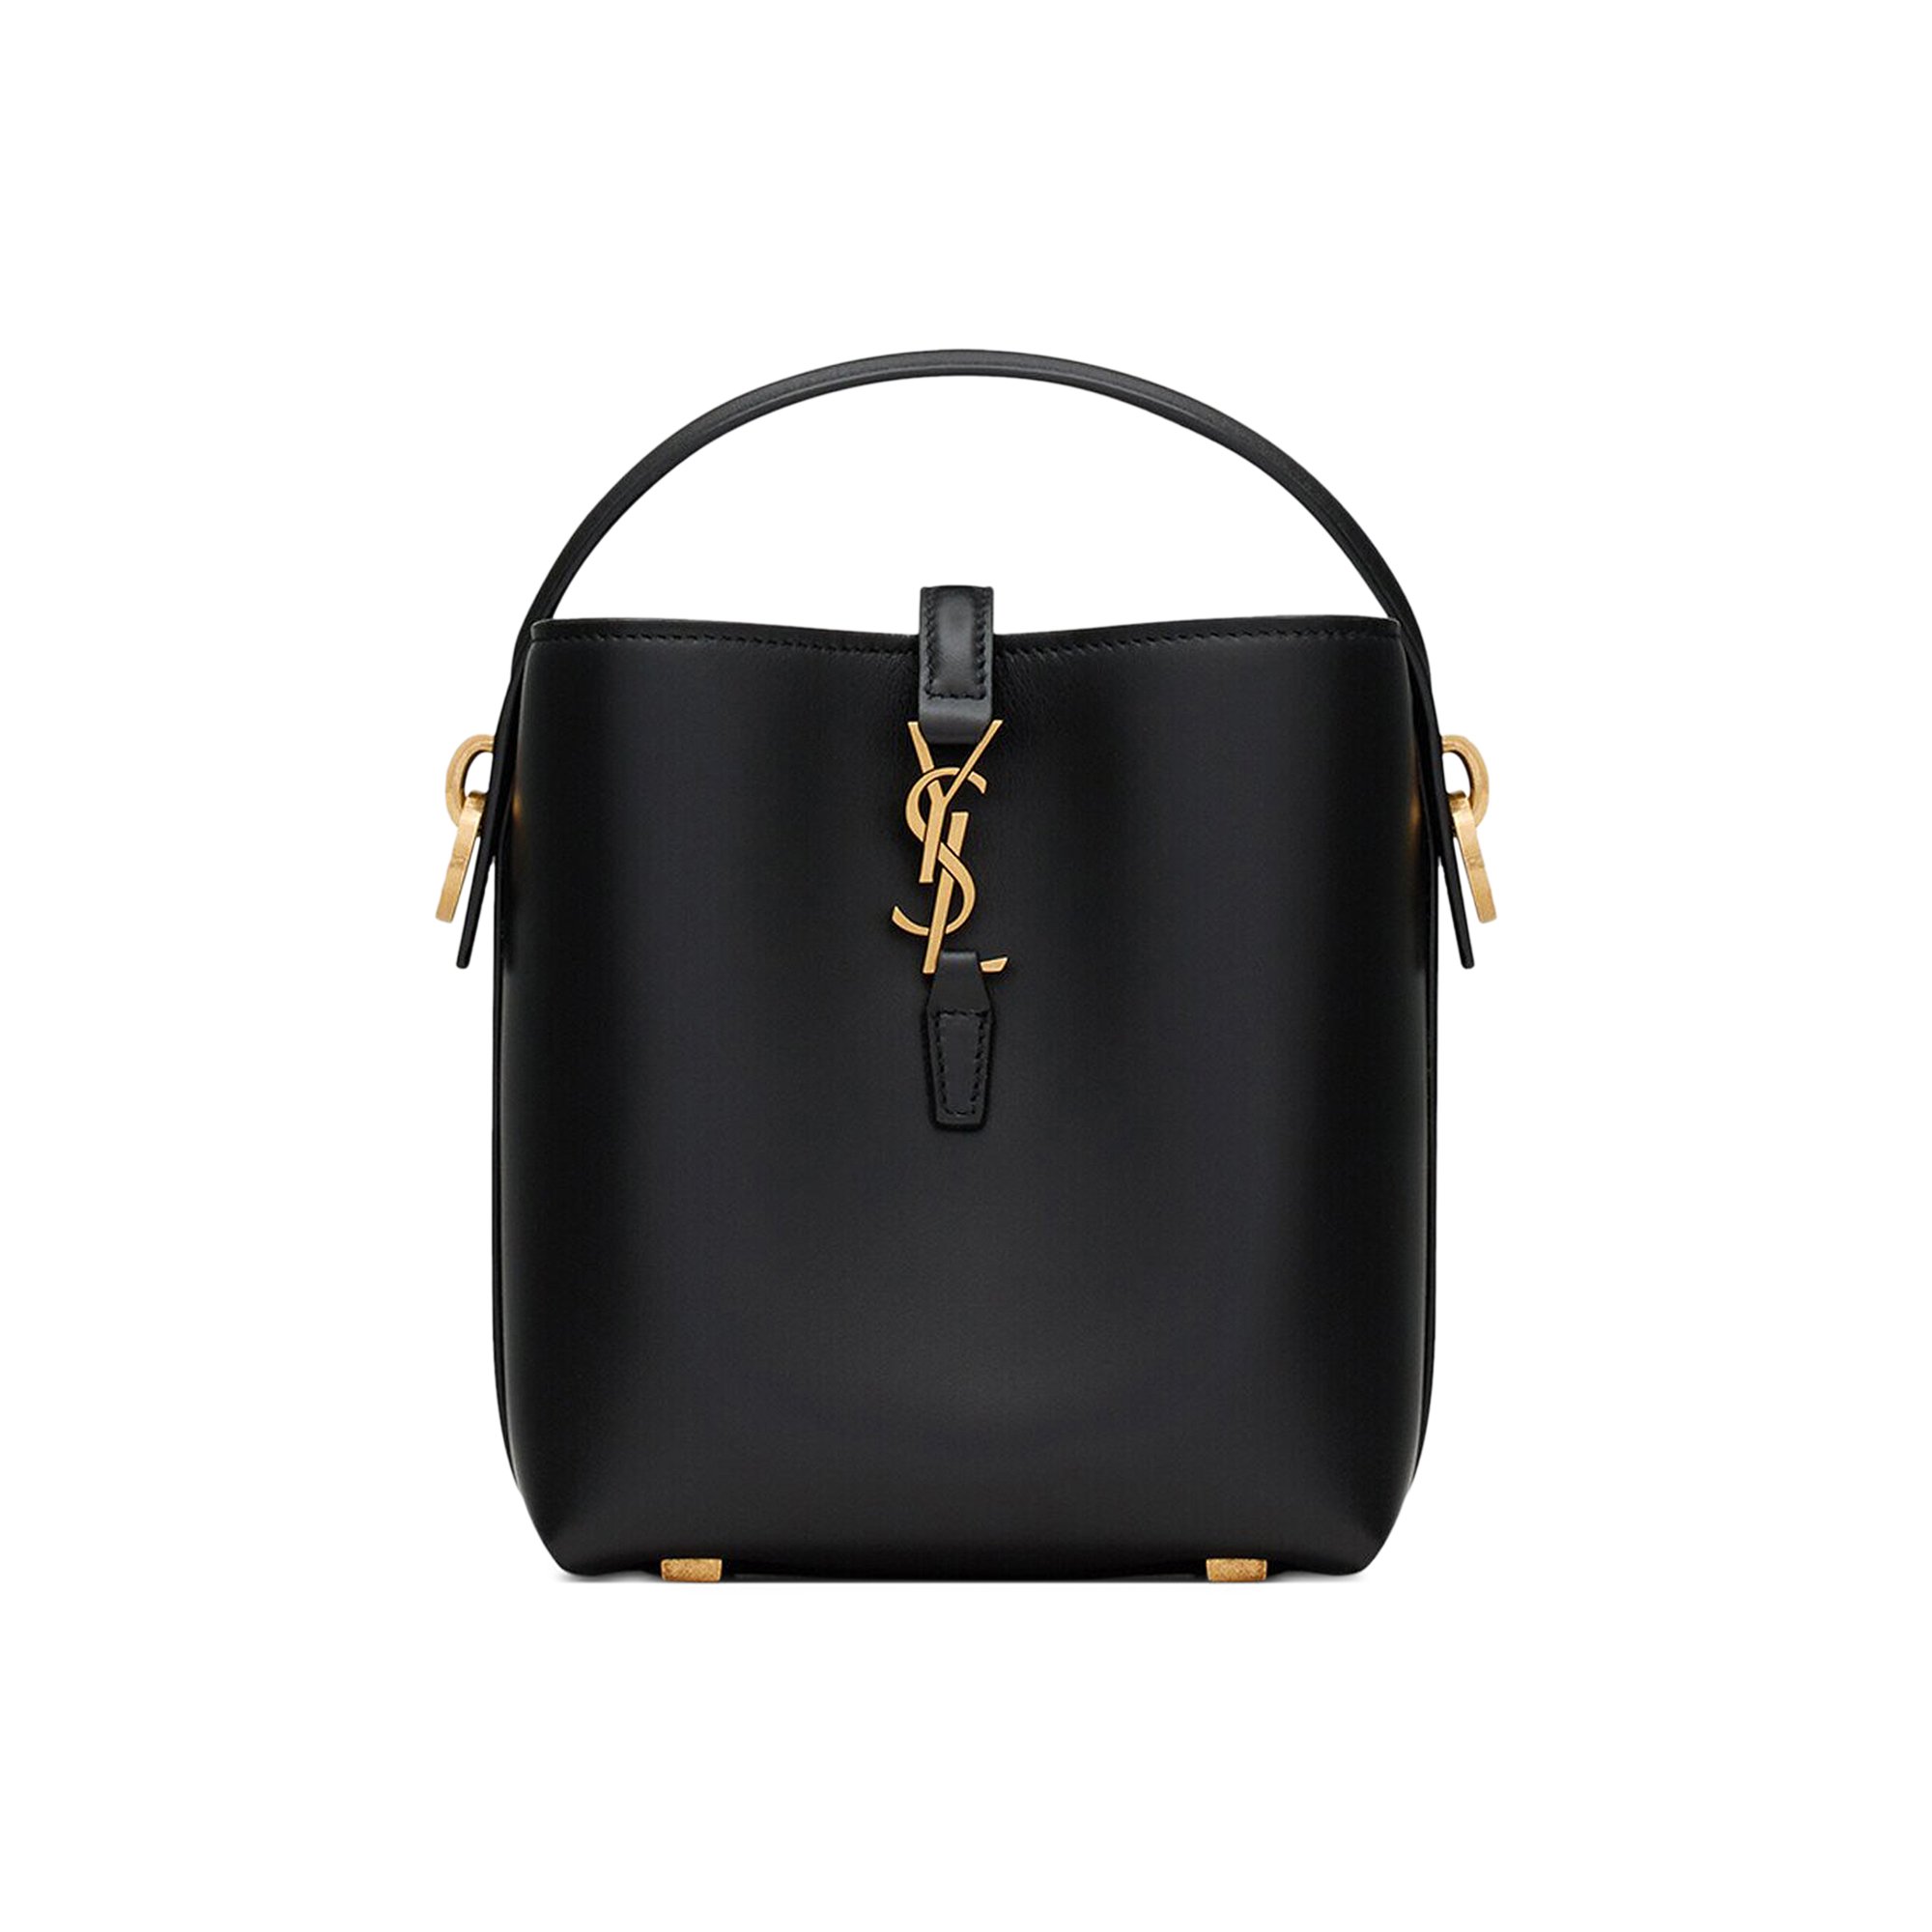 Buy Saint Laurent Le 37 Leather Shoulder Bag 'Black' - 765870 